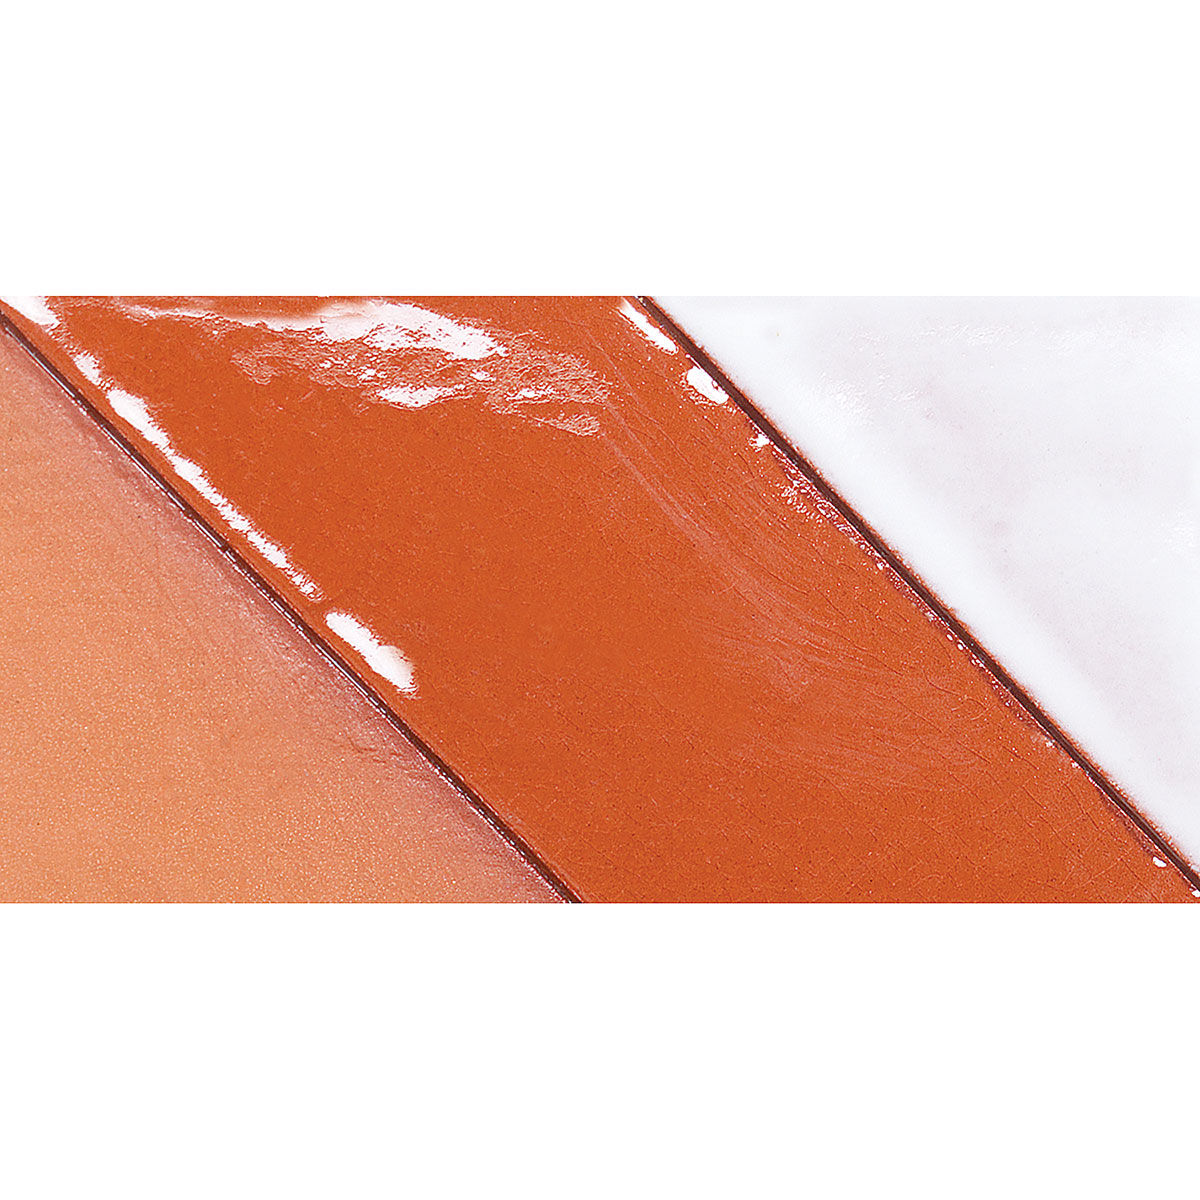 Sedona Red Clay No.67 : Low Fire Clays : Ceramic Clay